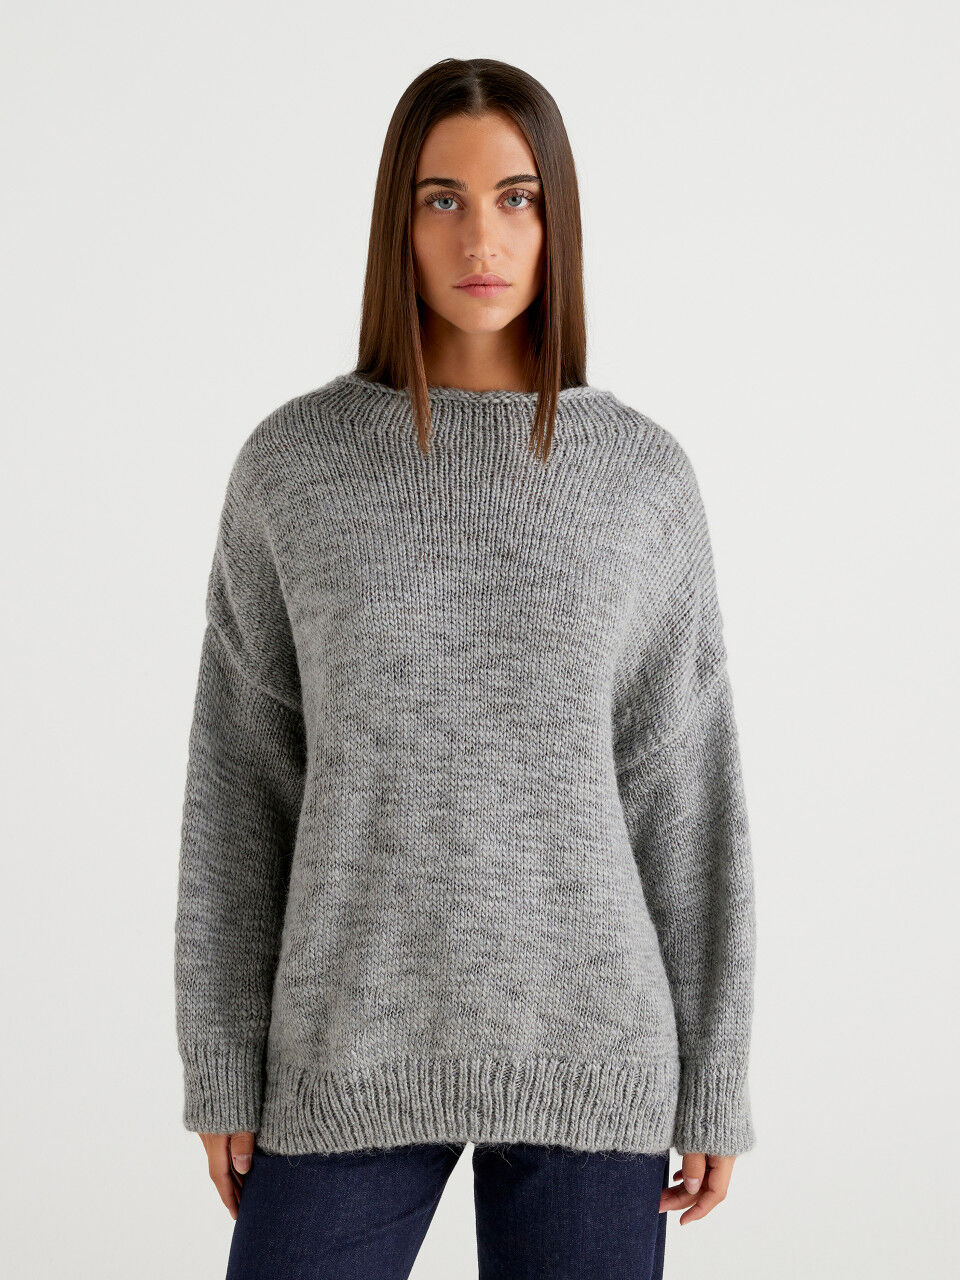 discount 94% Gray 68                  EU KIDS FASHION Jumpers & Sweatshirts Knitted C&A cardigan 